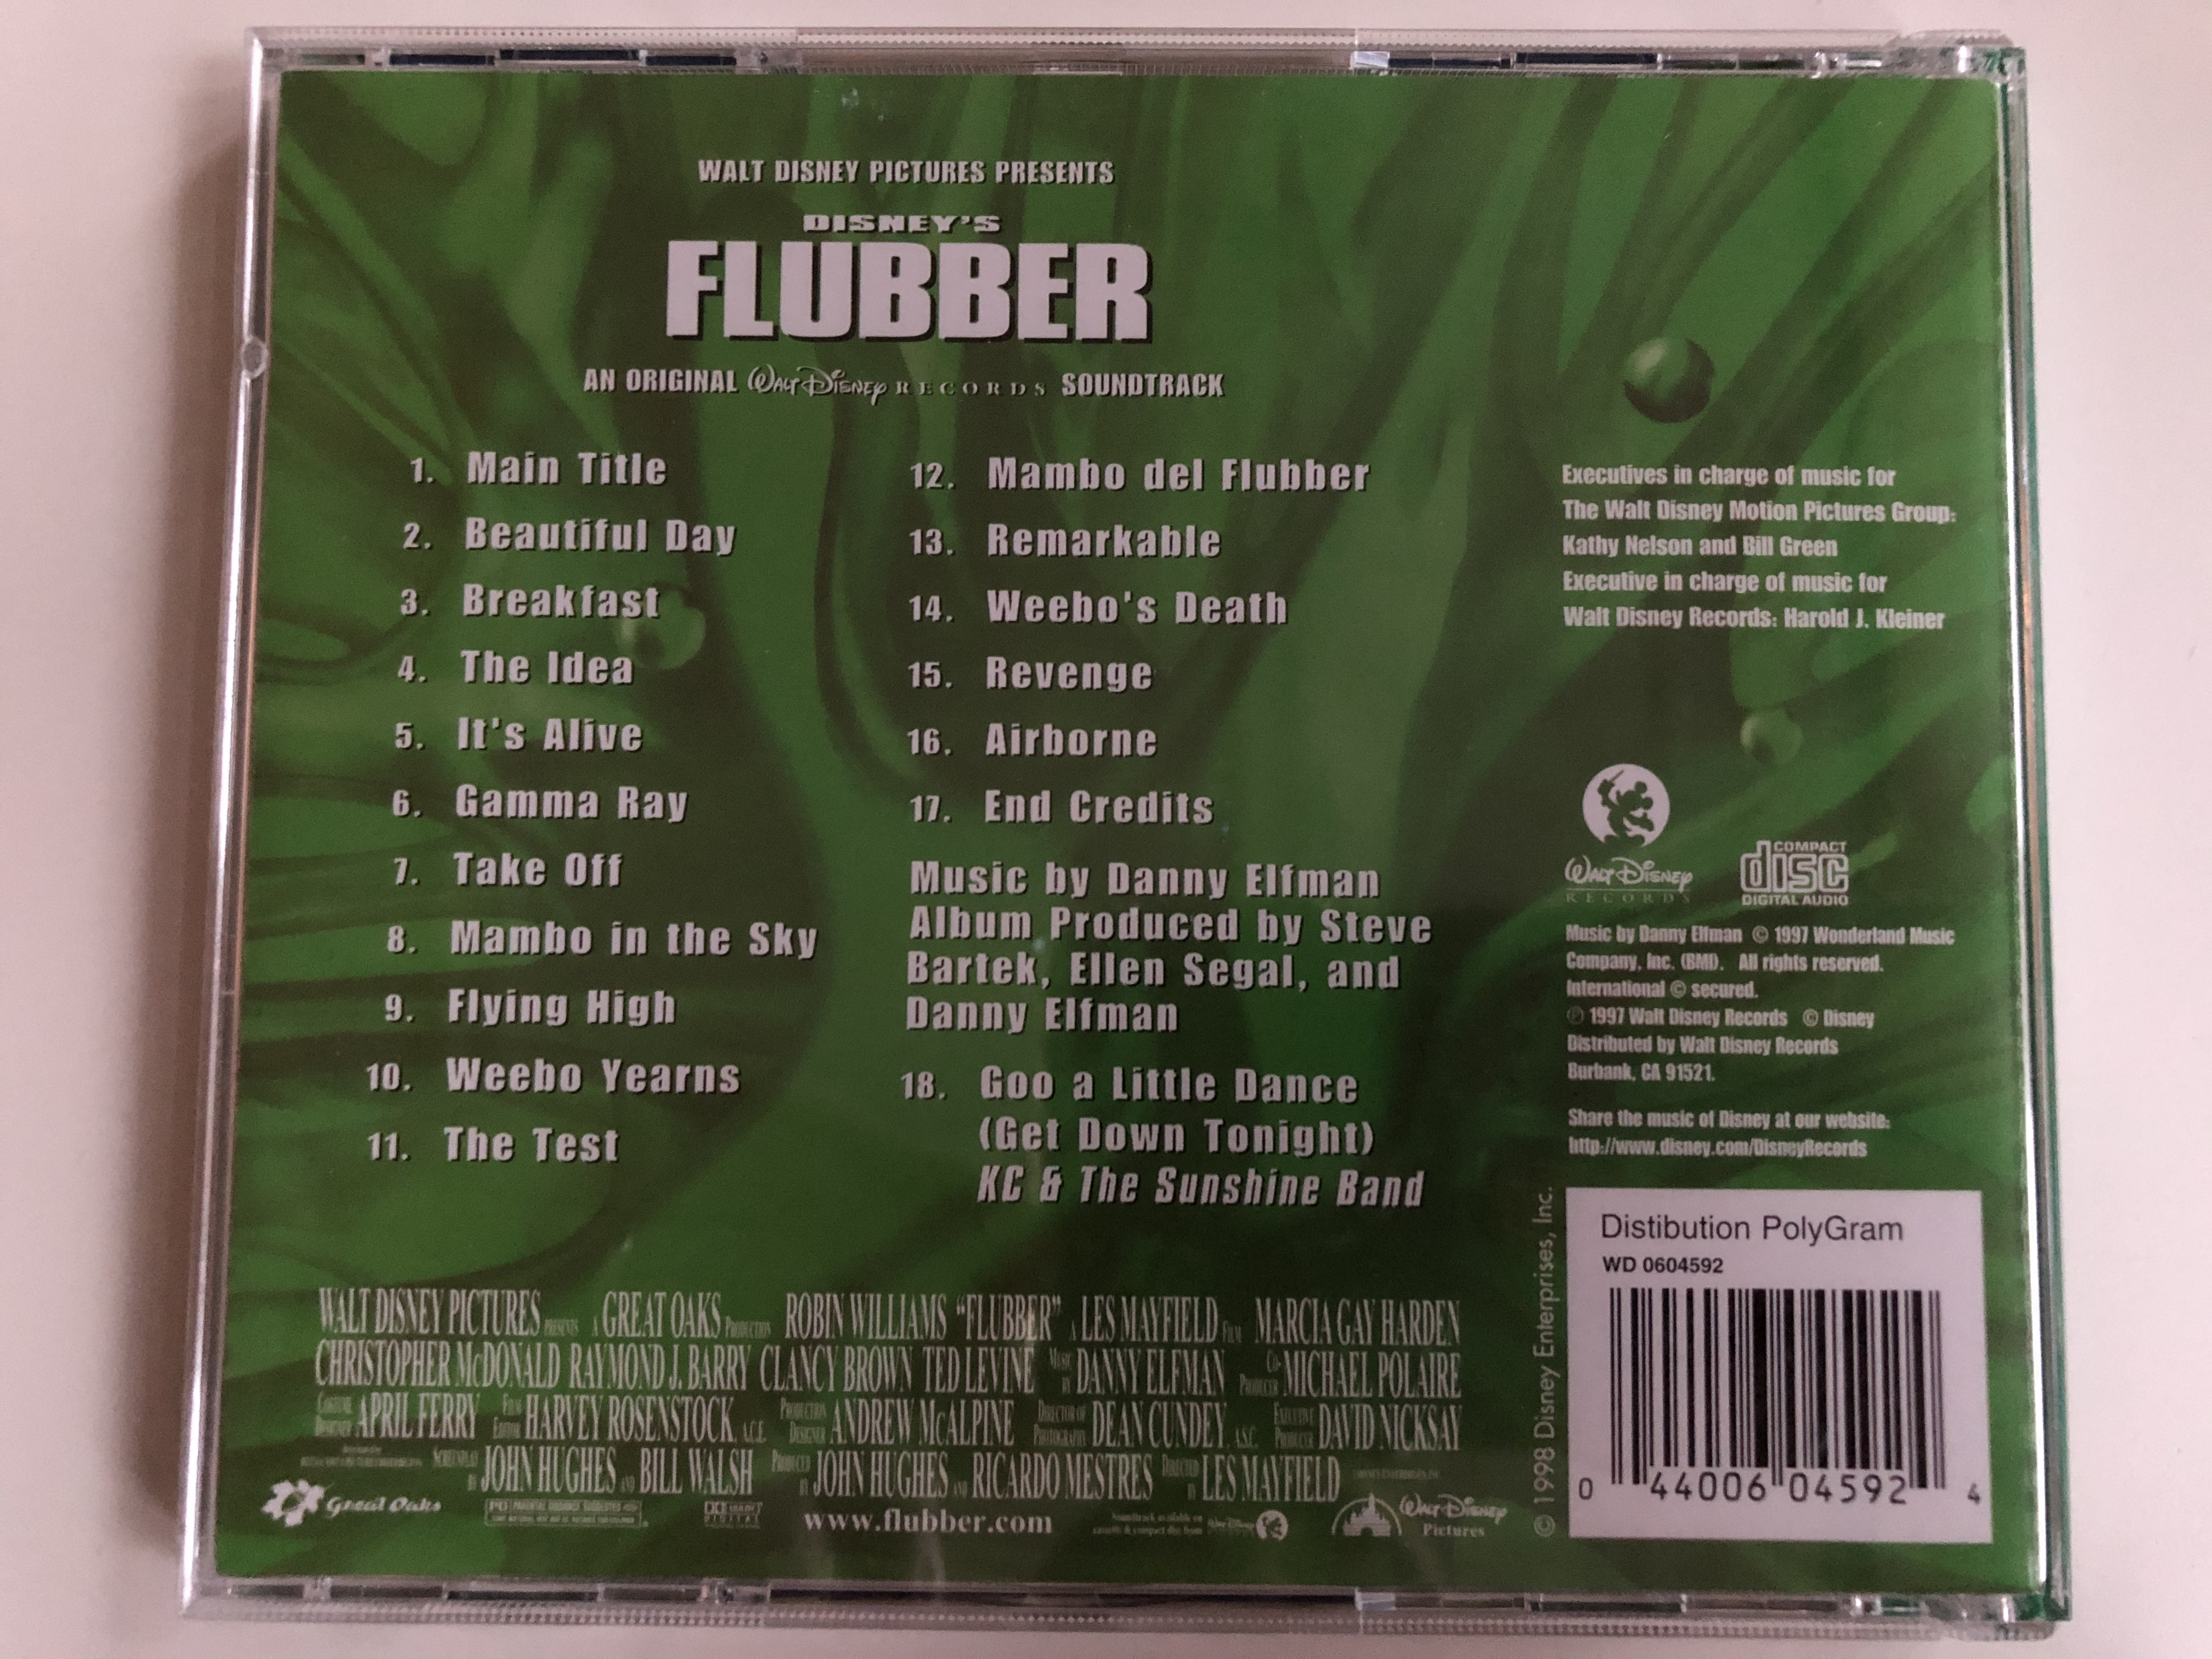 walt-disney-pictures-presents-disney-s-flubber-music-by-danny-elfman-an-original-walt-disney-record-soundtrack-walt-disney-enterprises-inc.-audio-cd-1997-wd-0604592-3-.jpg